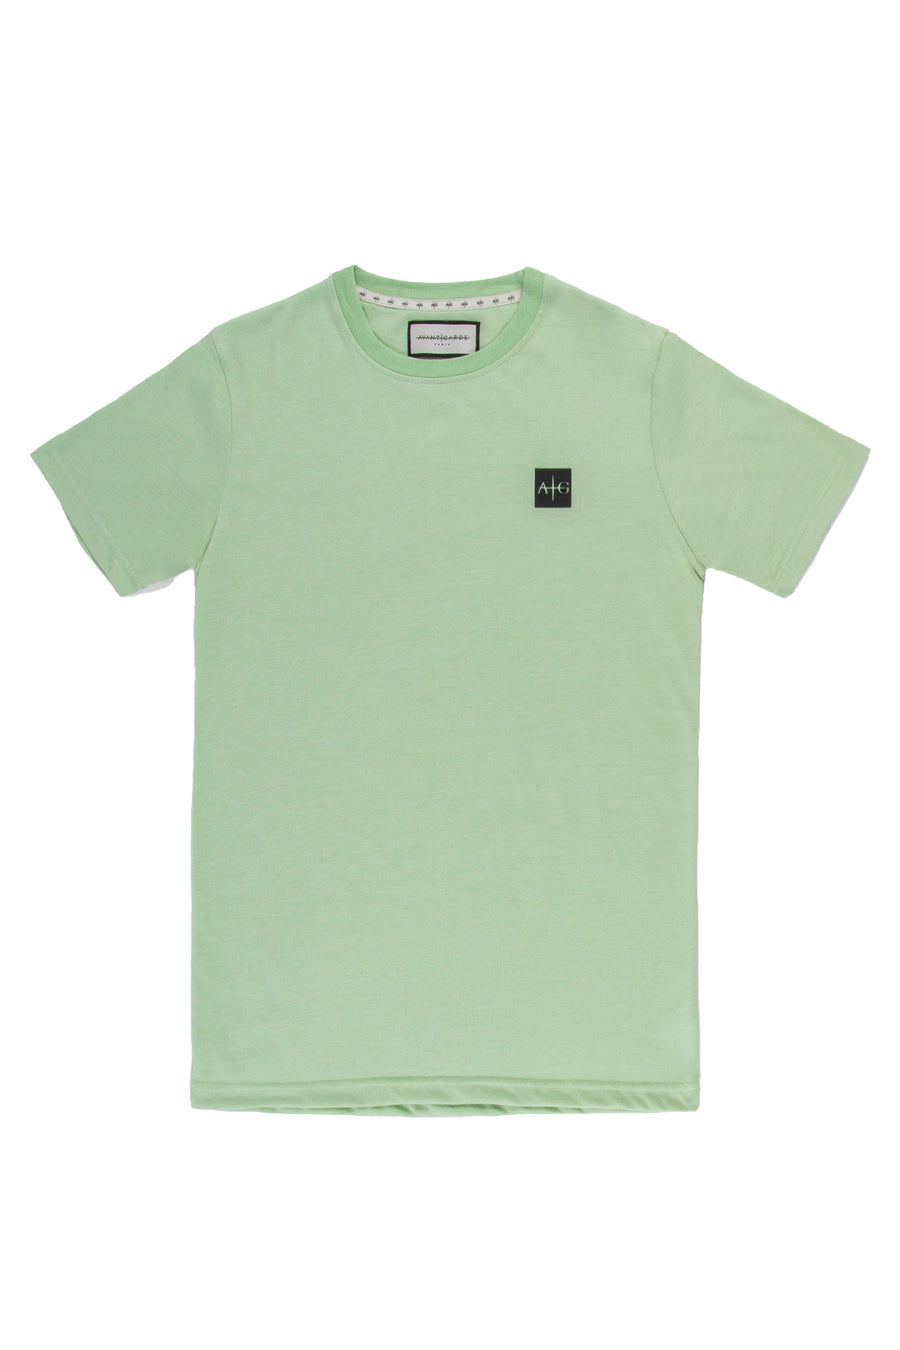 Sawton Three Pack T-Shirts in Baby Blue/Chalk Pink/Mint Green